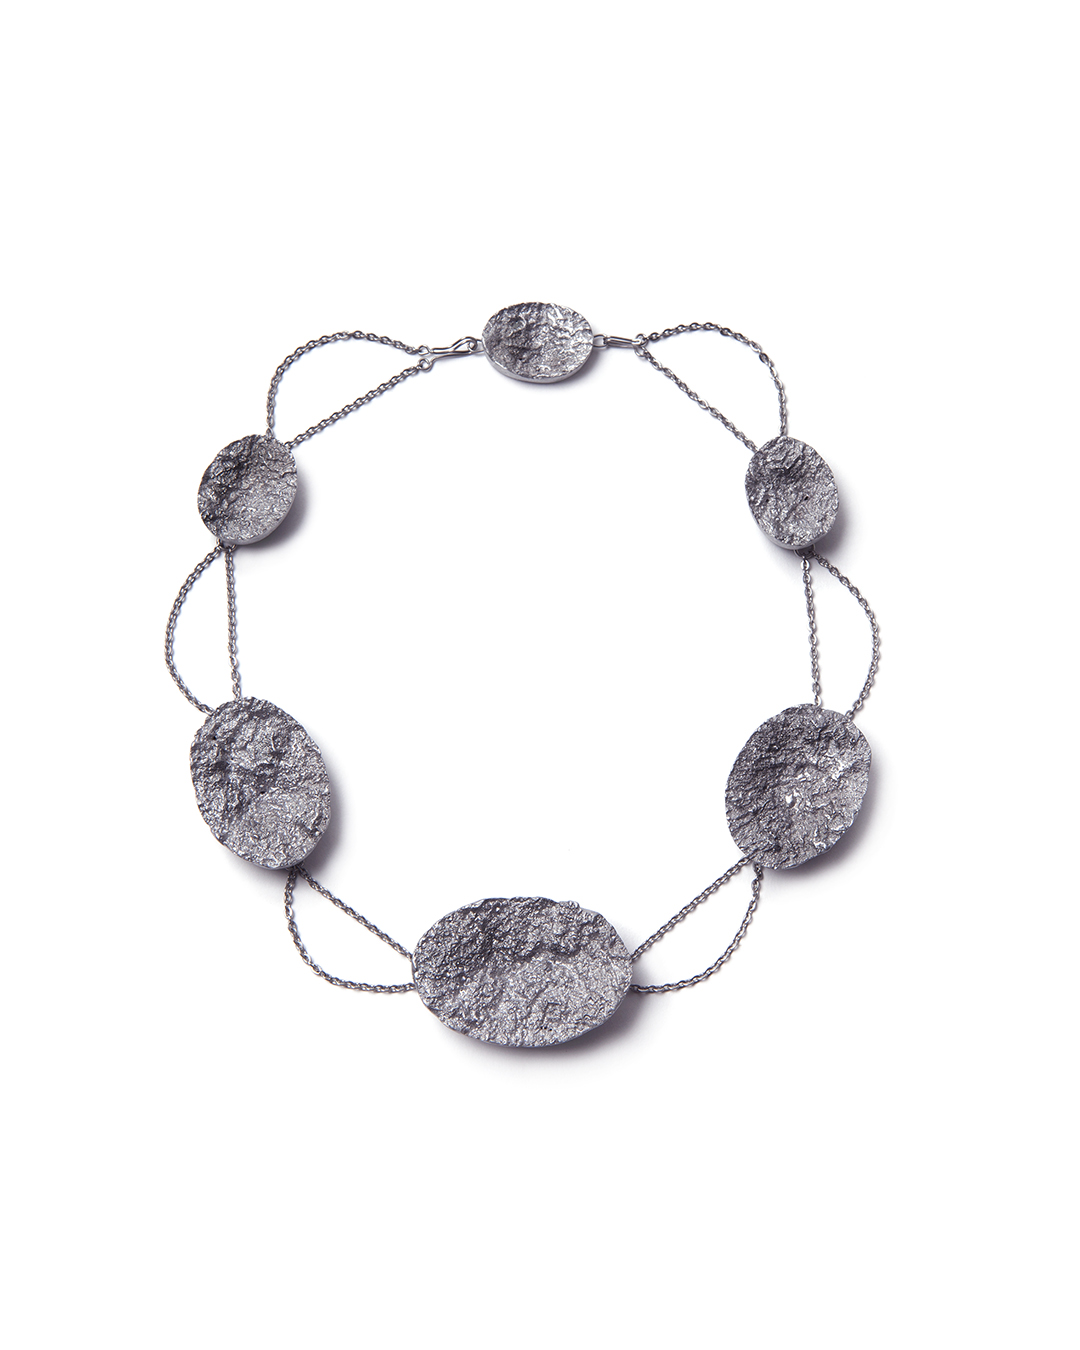 Barbara Schrobenhauser, Surfaces, 2015, necklace; aluminium, stainless steel, silver, 490 x 12 mm, €1575